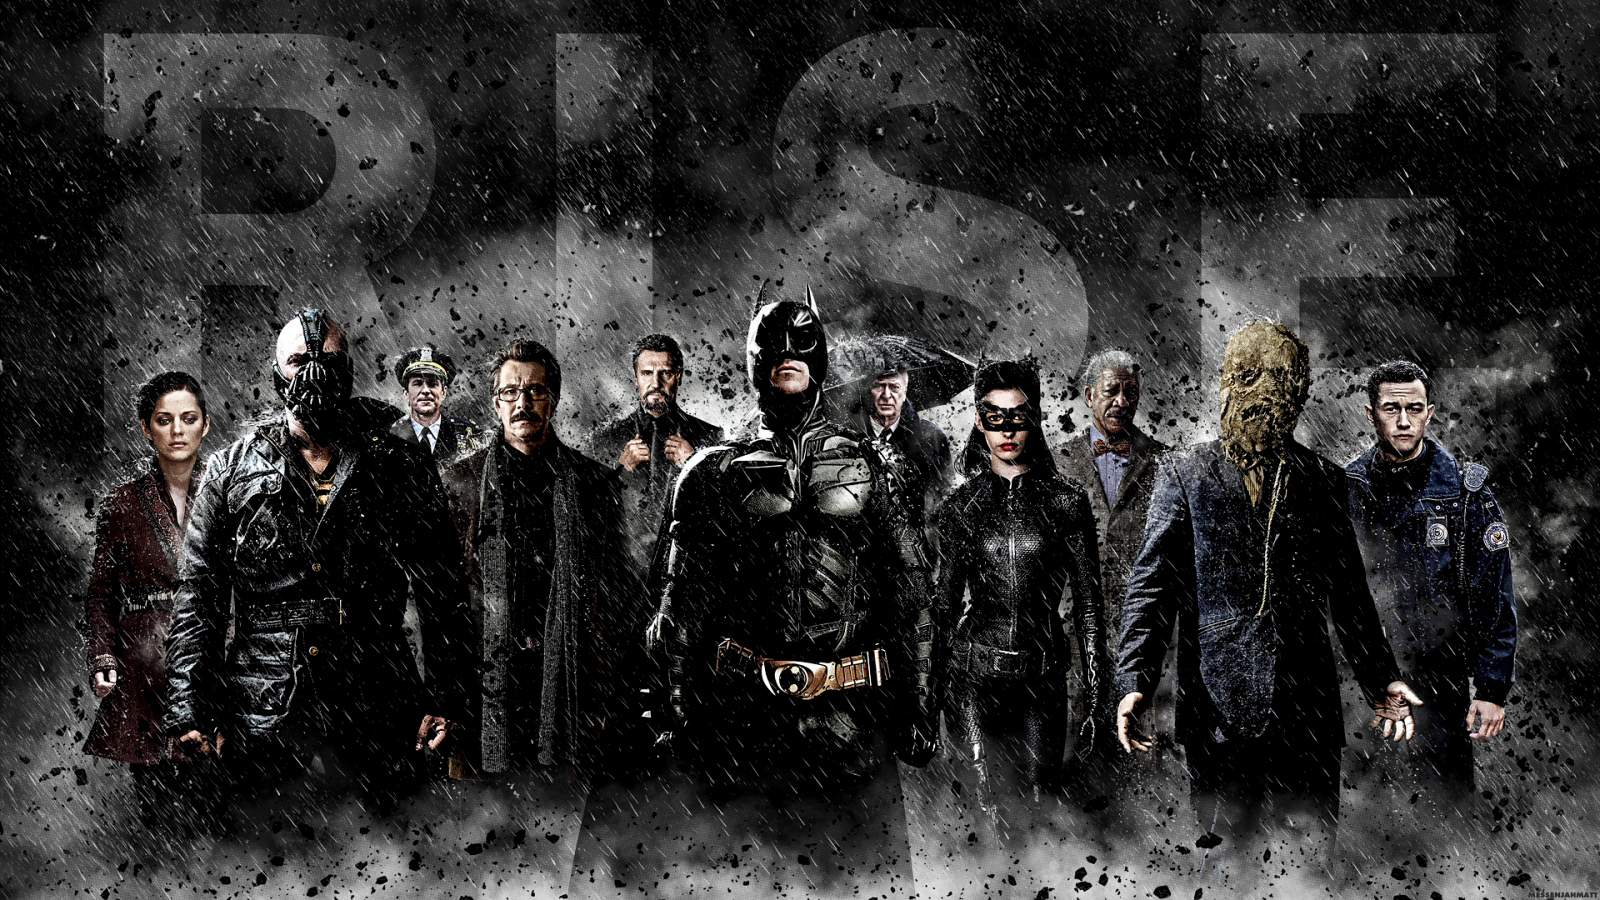 Batman The Dark Knight Rises 2012 HD Poster Wallpapers